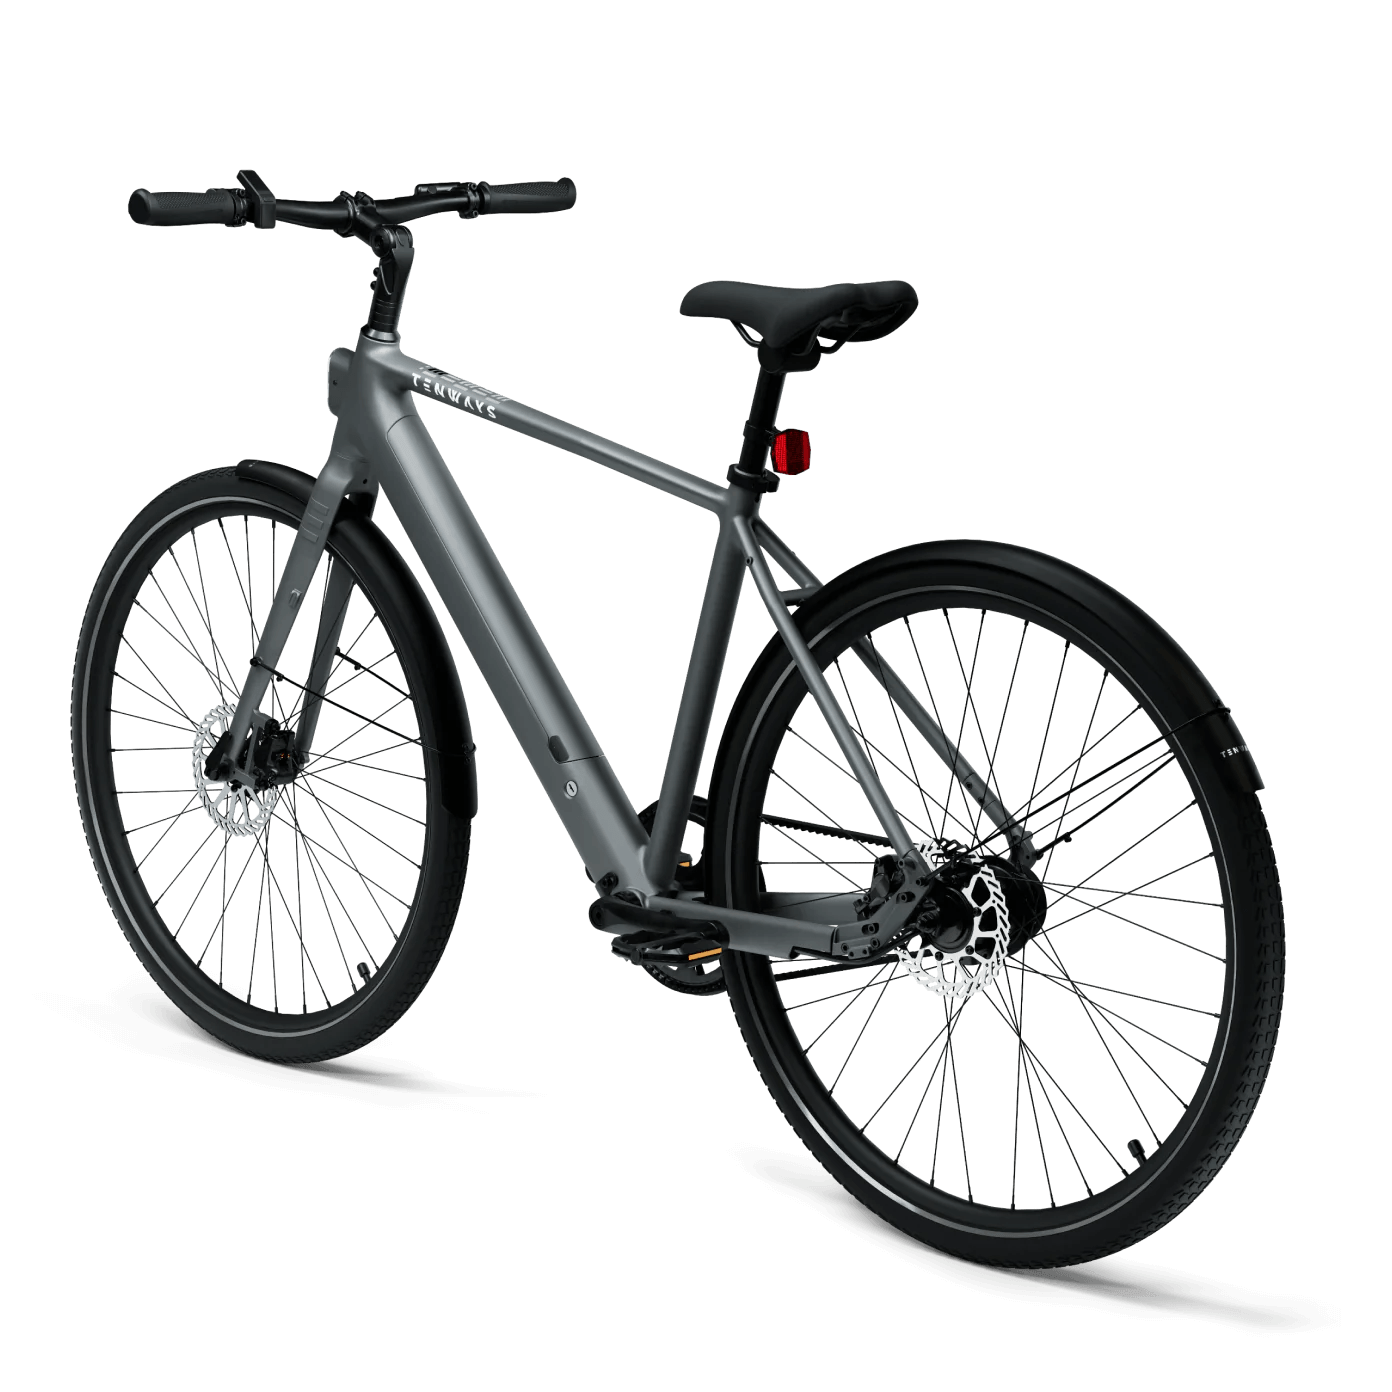 TENWAYS CGO600 PRO Electric Bike